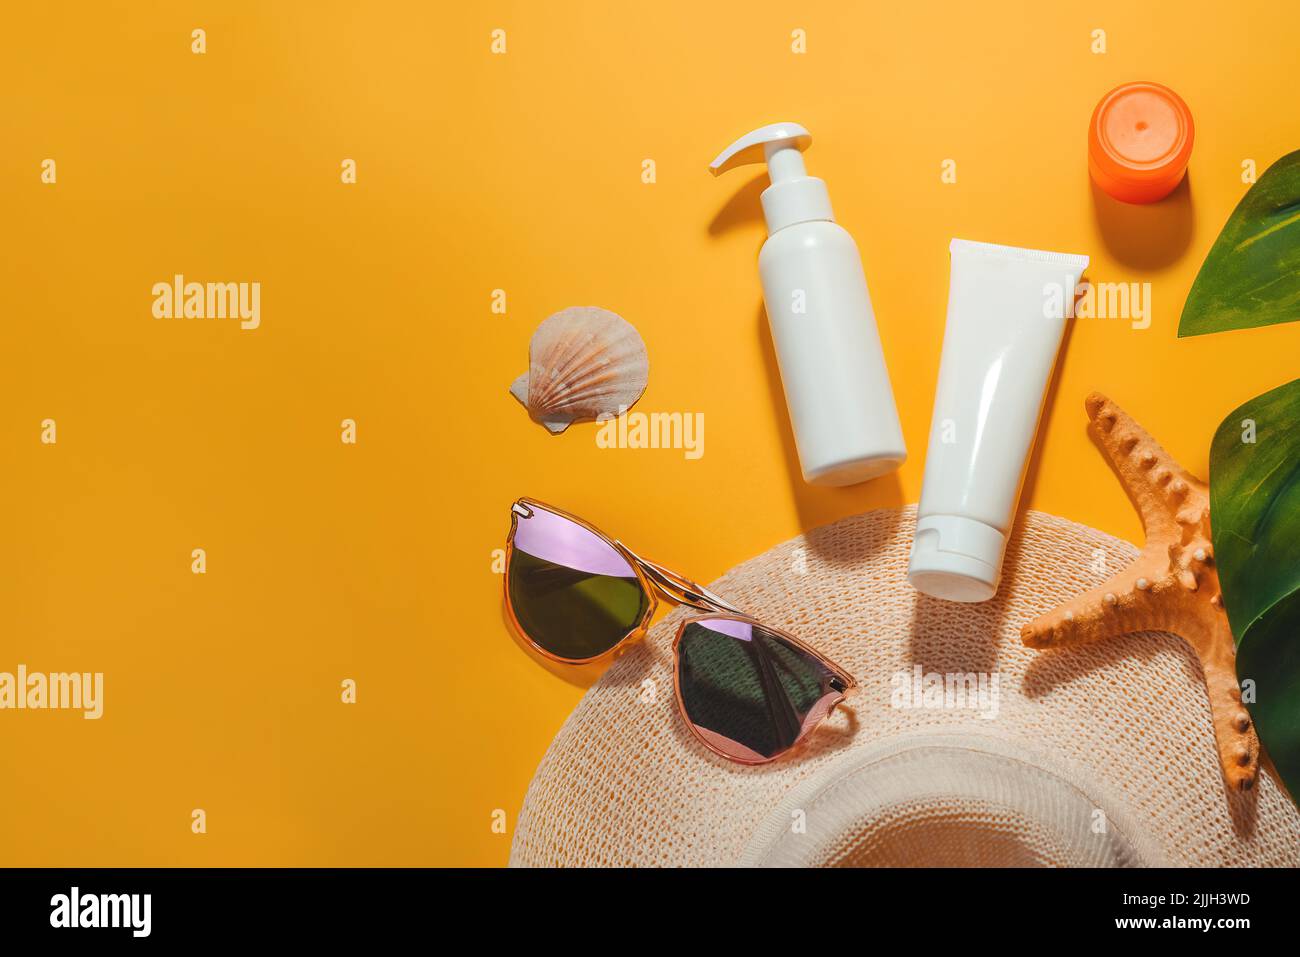 Set of accessories for sun protection on beach sunglasses, cosmetics, SPF cream Stock Photo